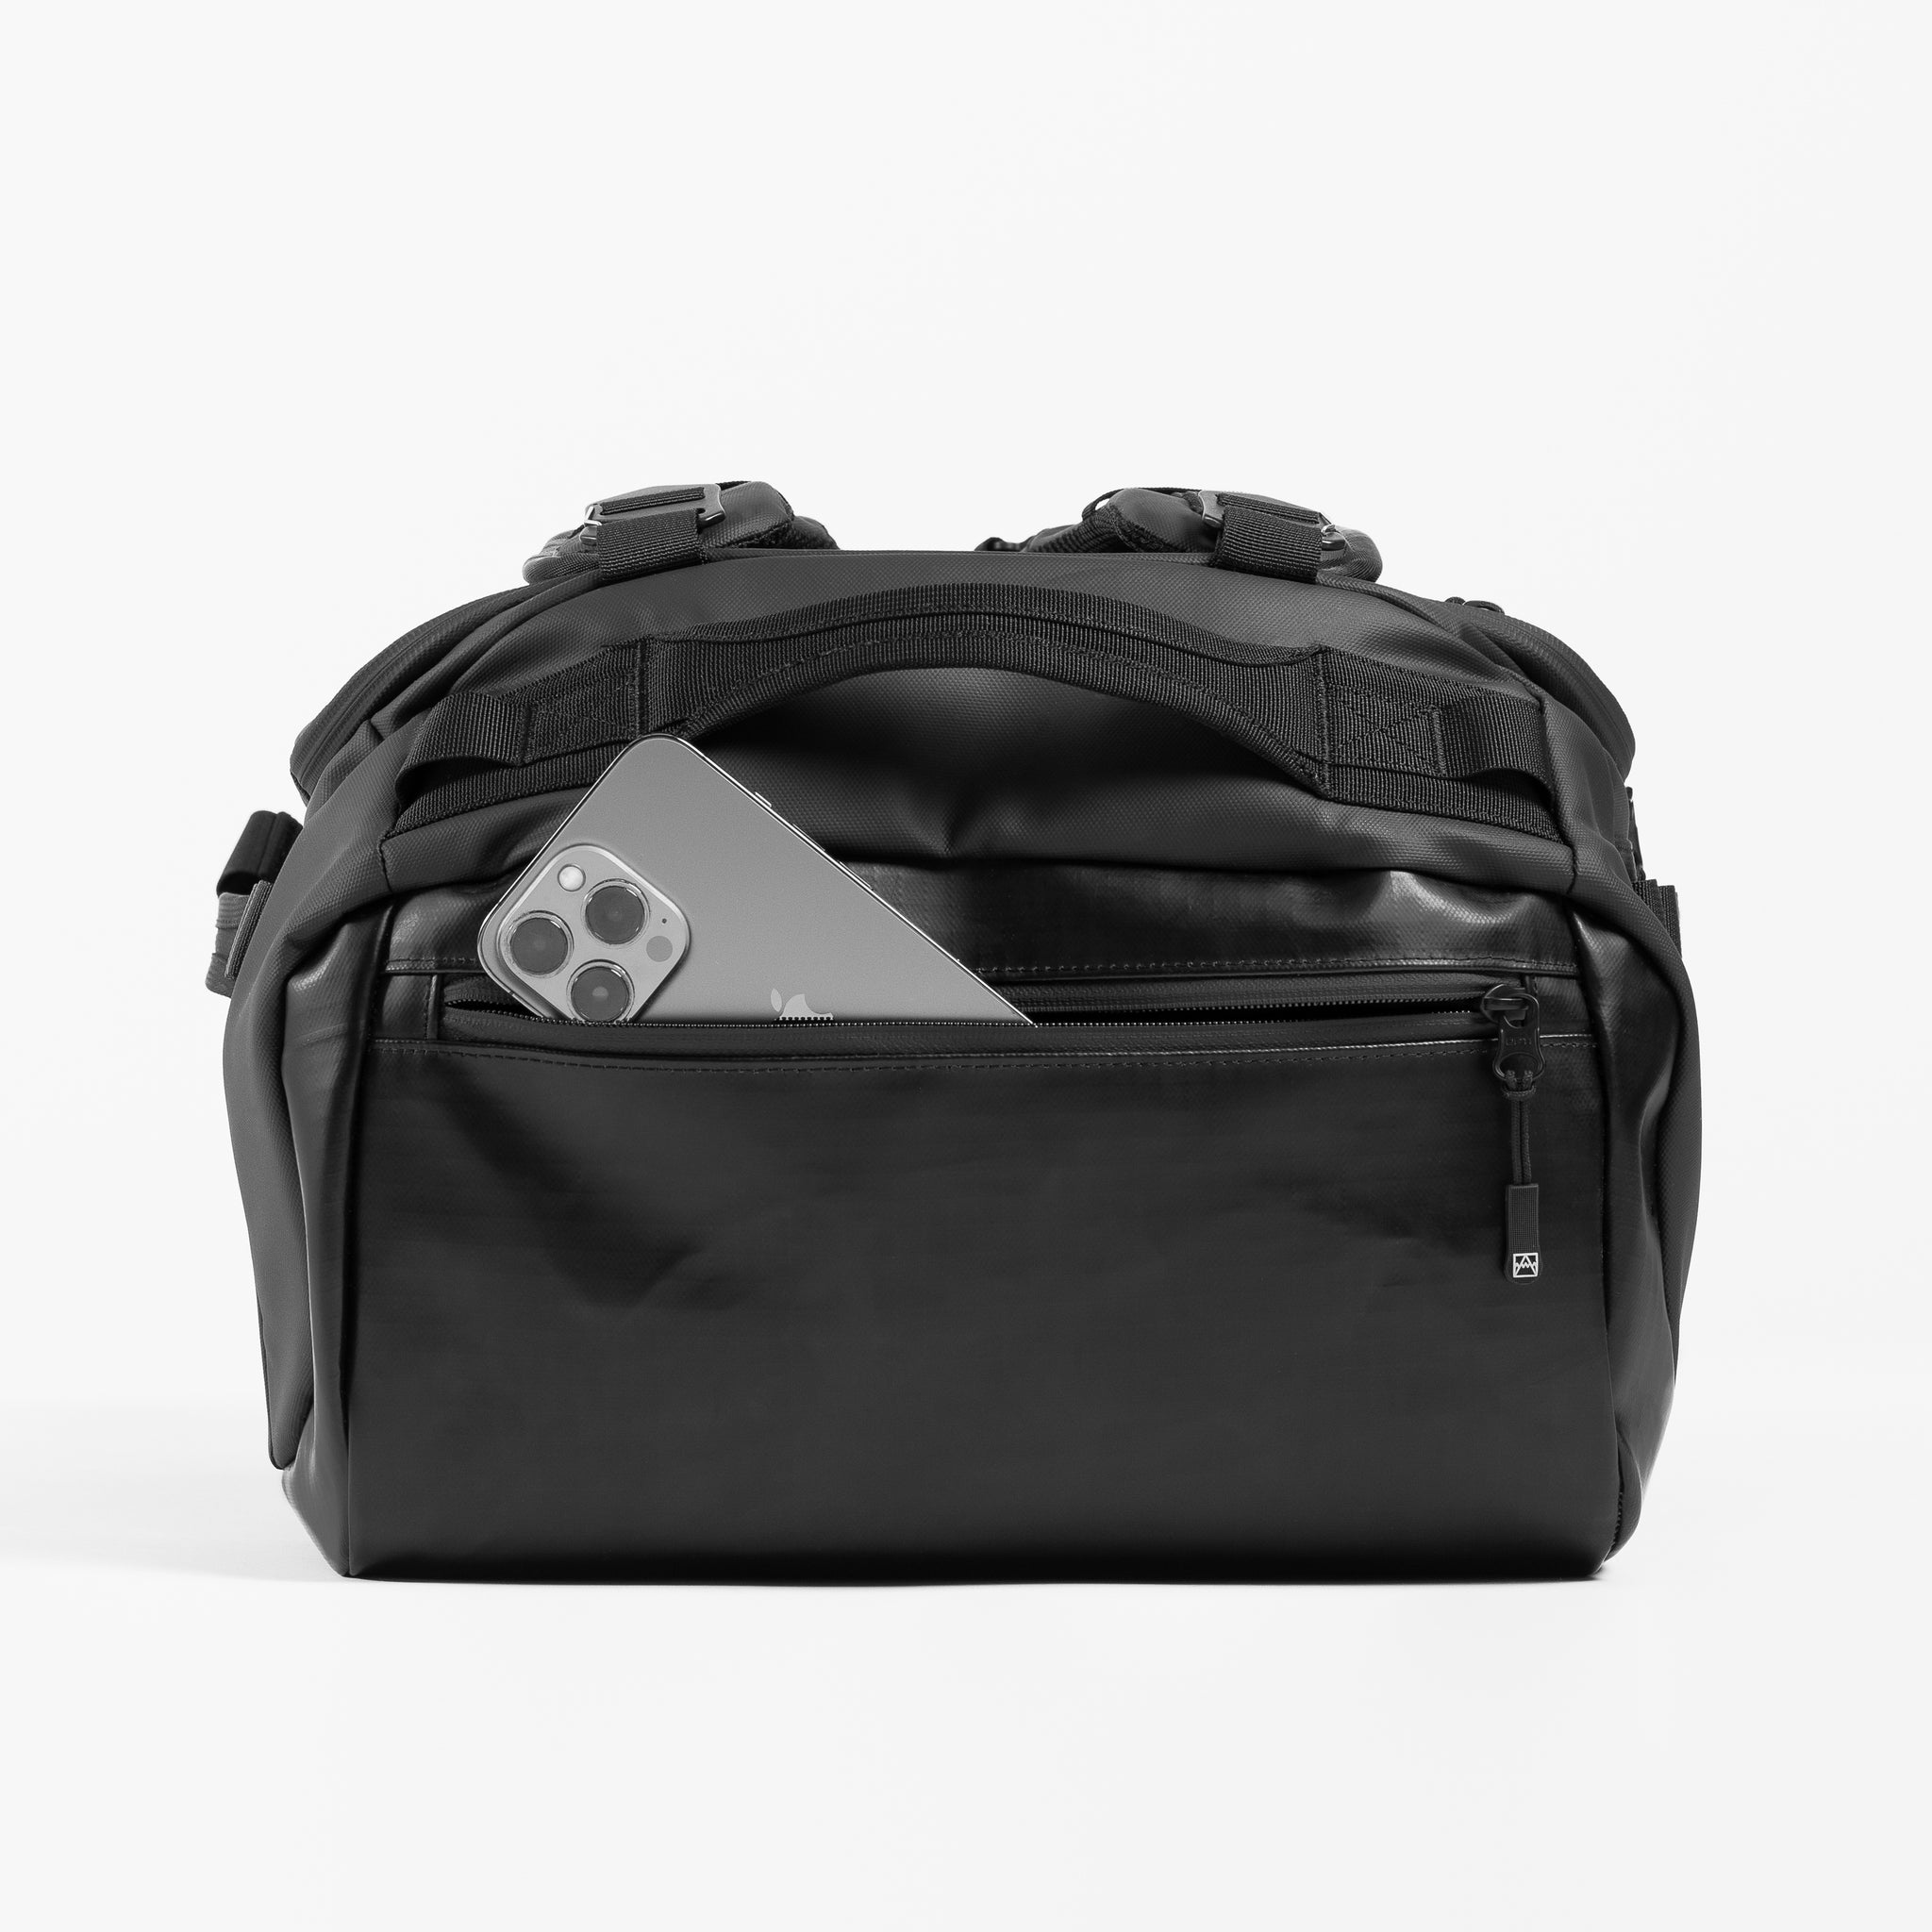 The Kit Bag All Black Backpack with zip pocket